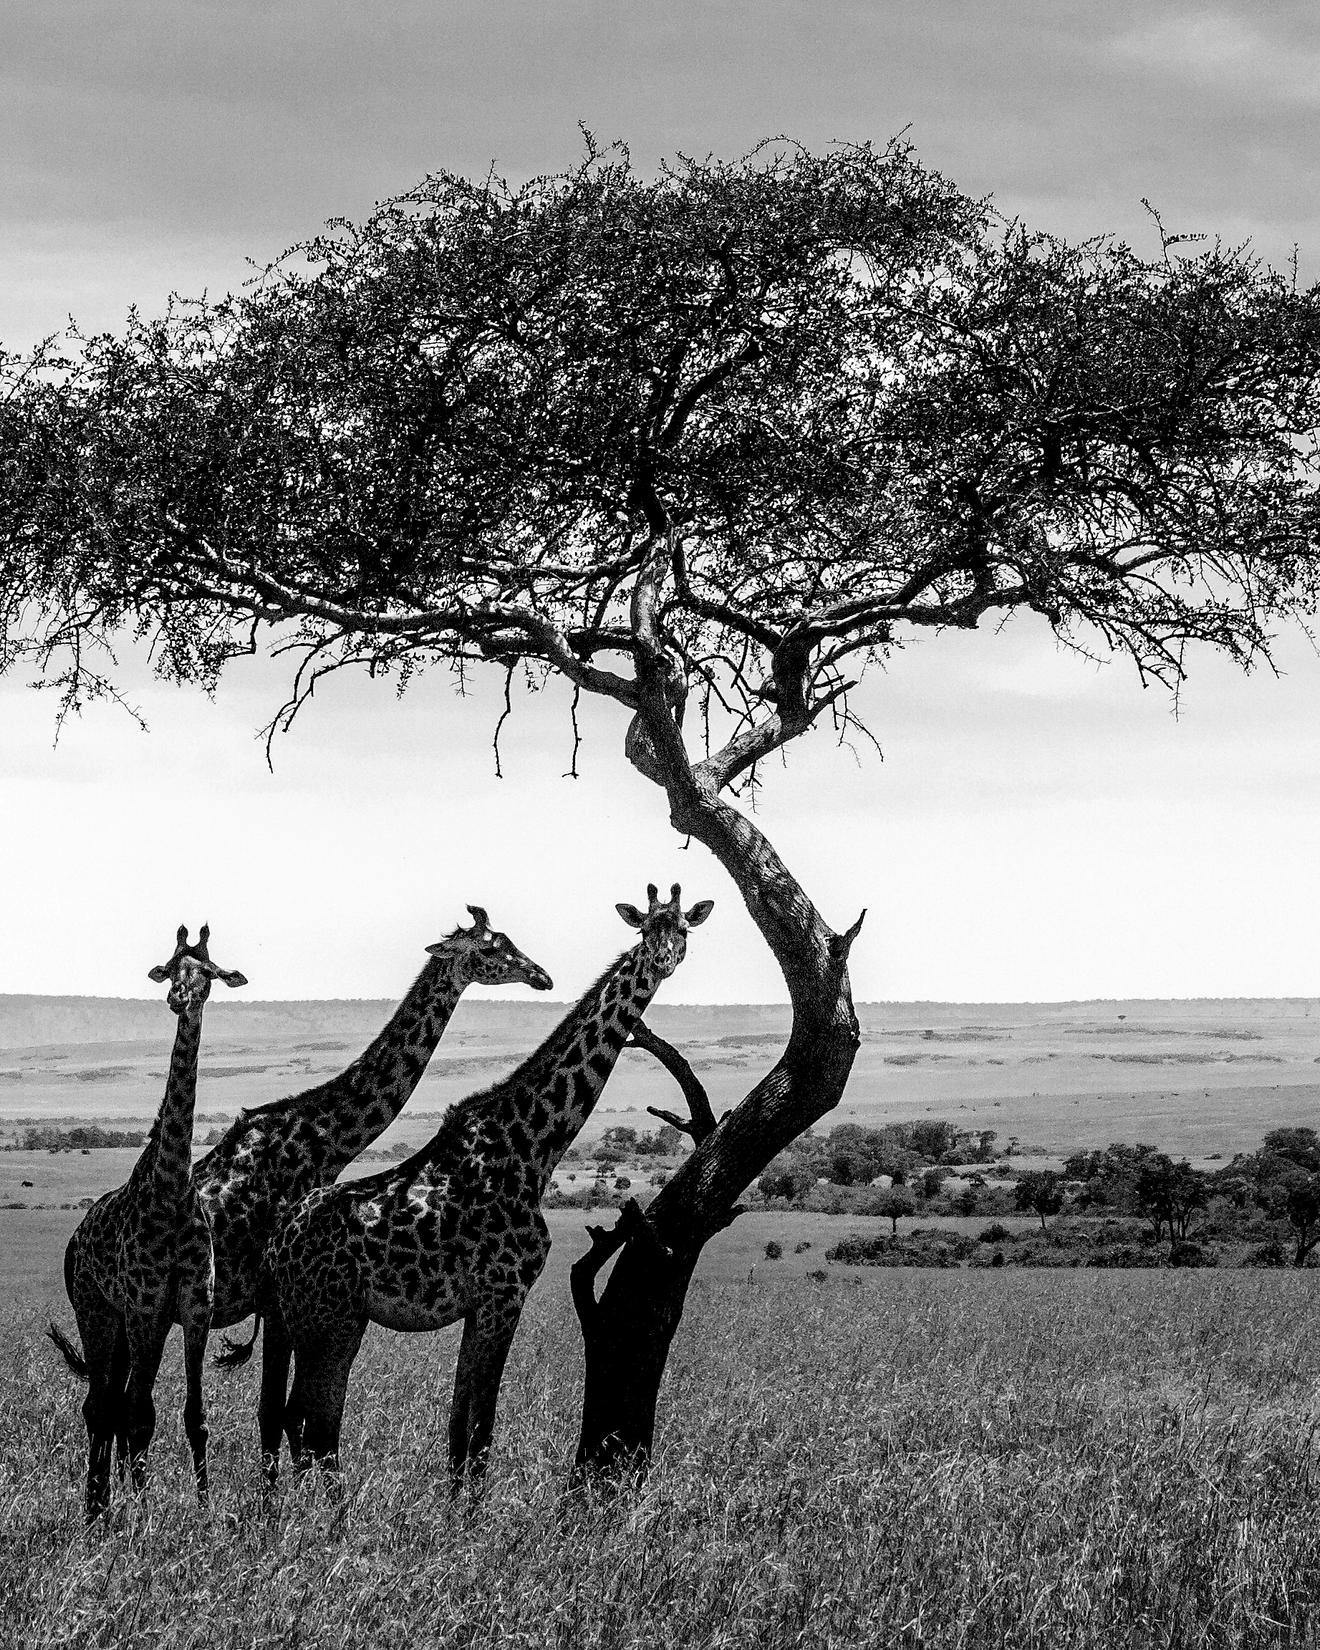 Three giraffes under a single tree in South Africa